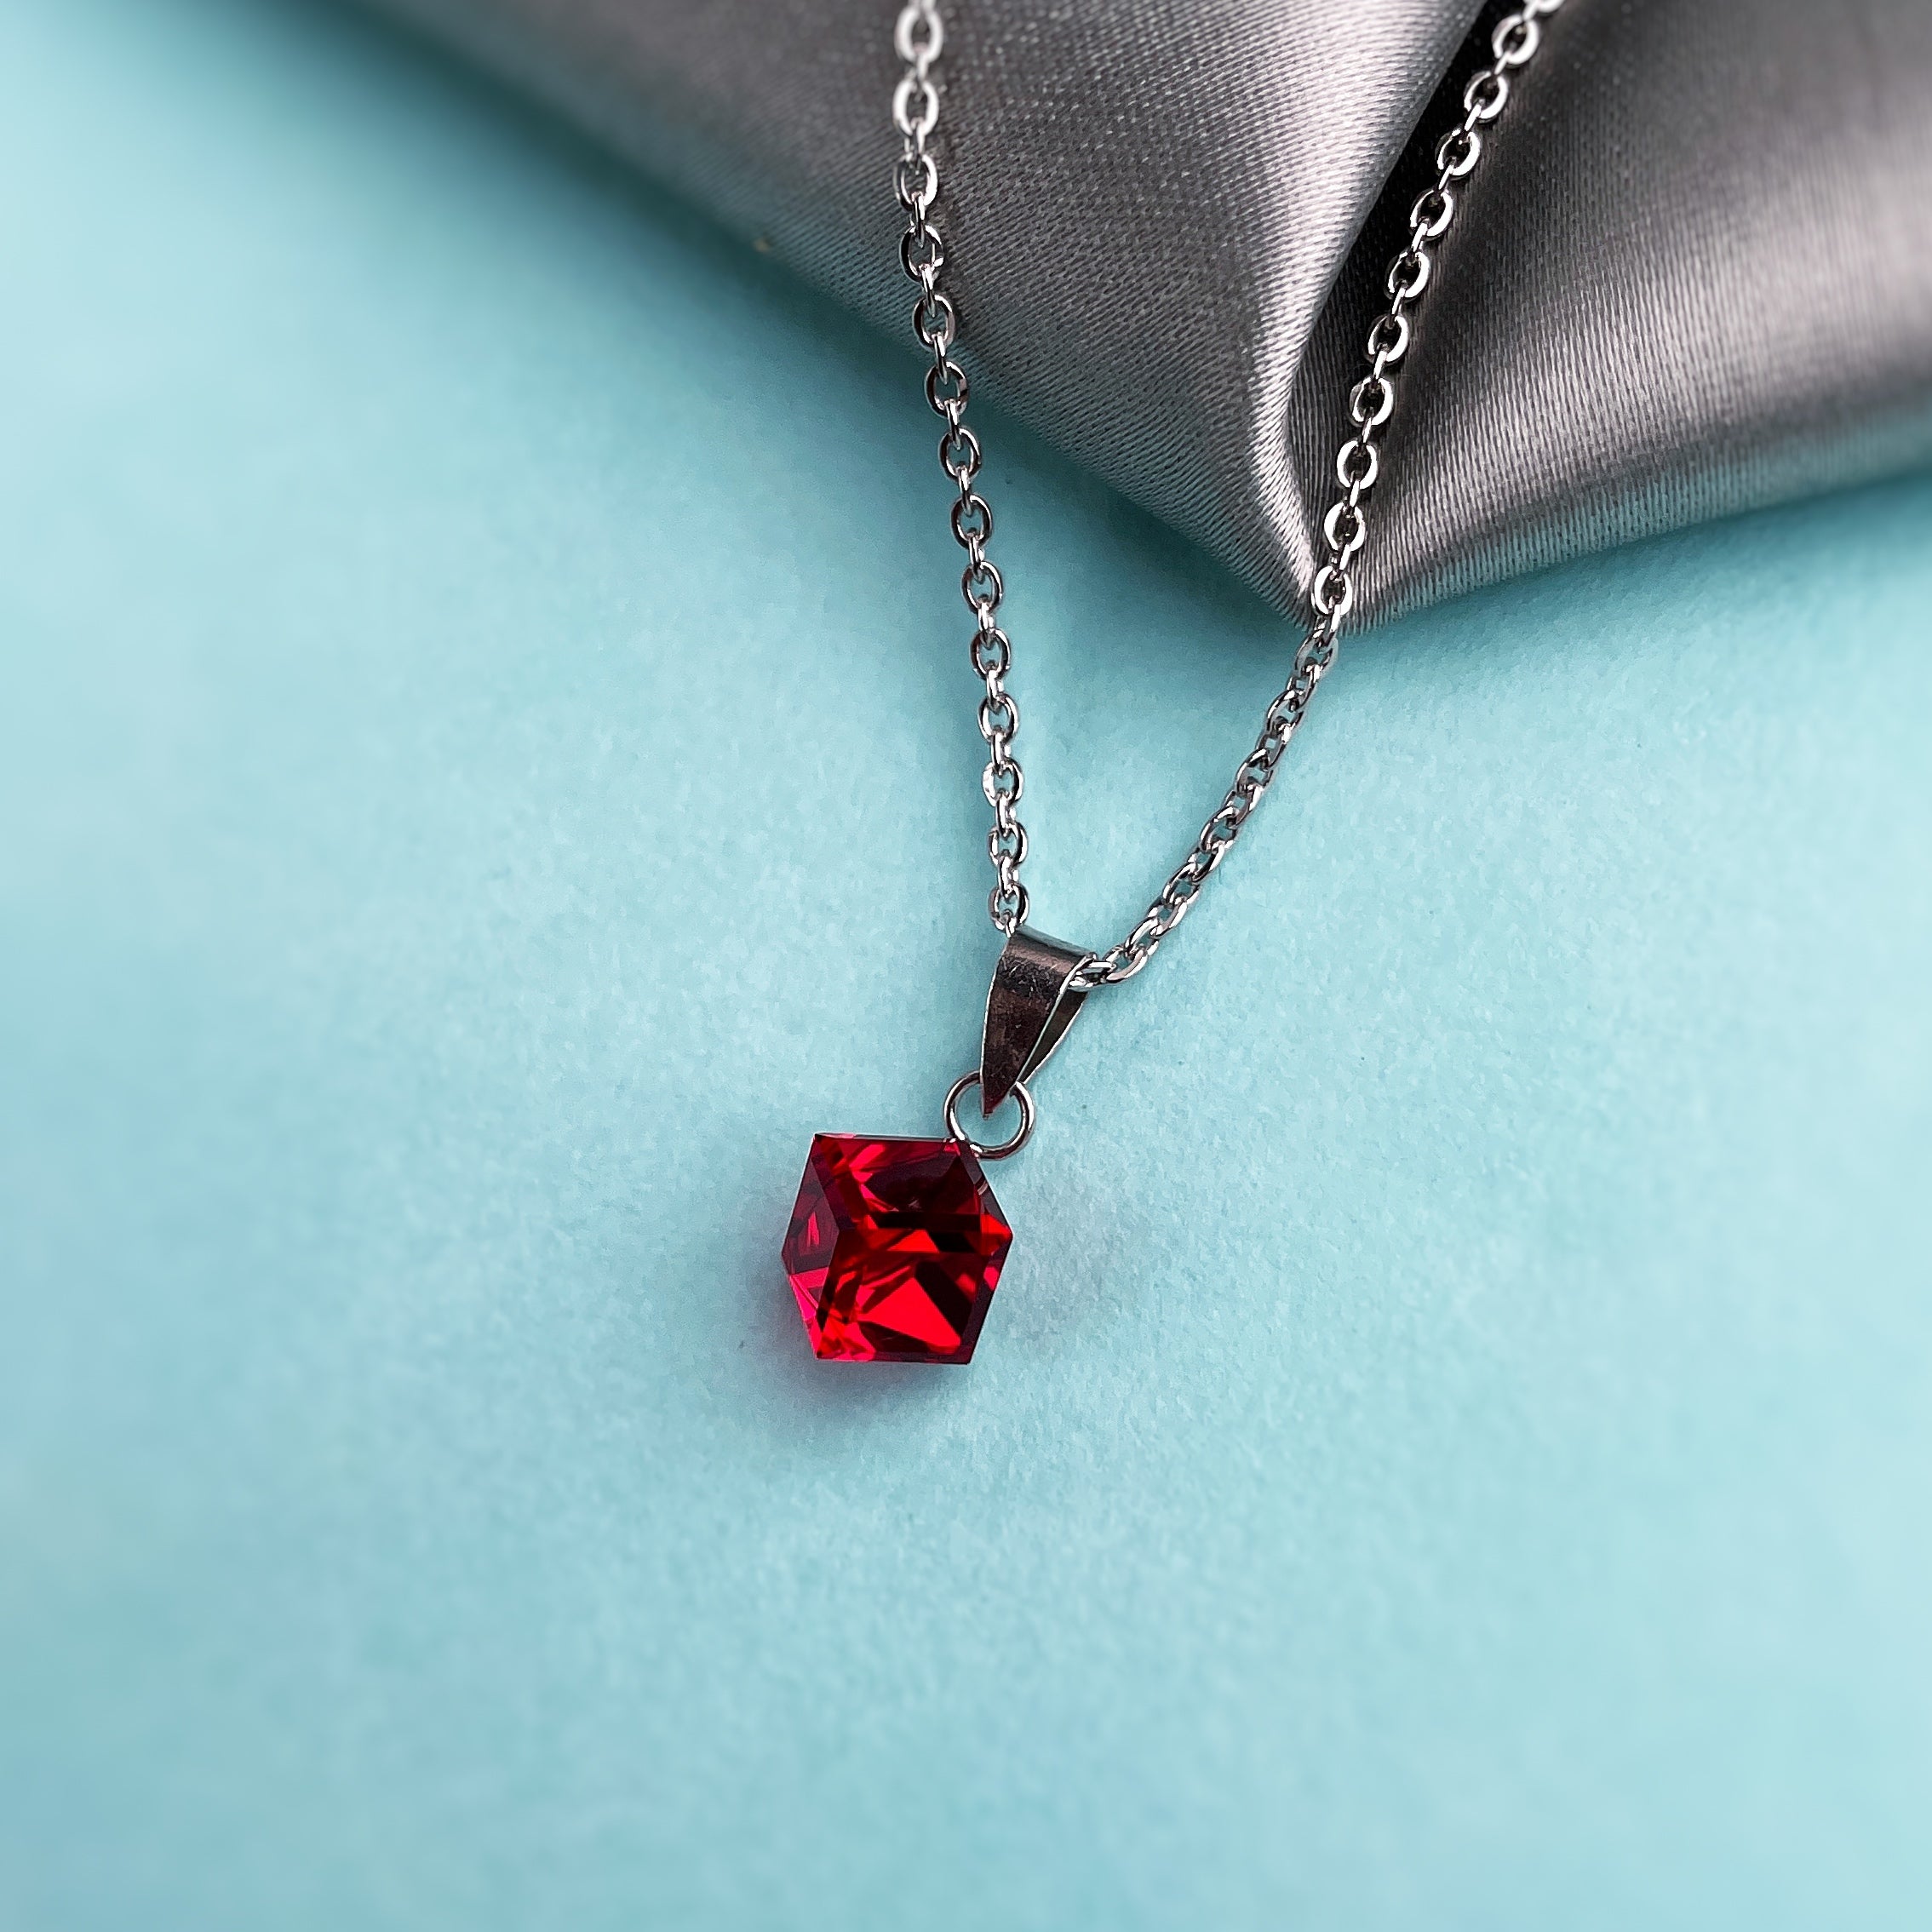 Buy Stunning Red Rose Pure Silver Pendant Necklace at FABUNORA – Fabunora